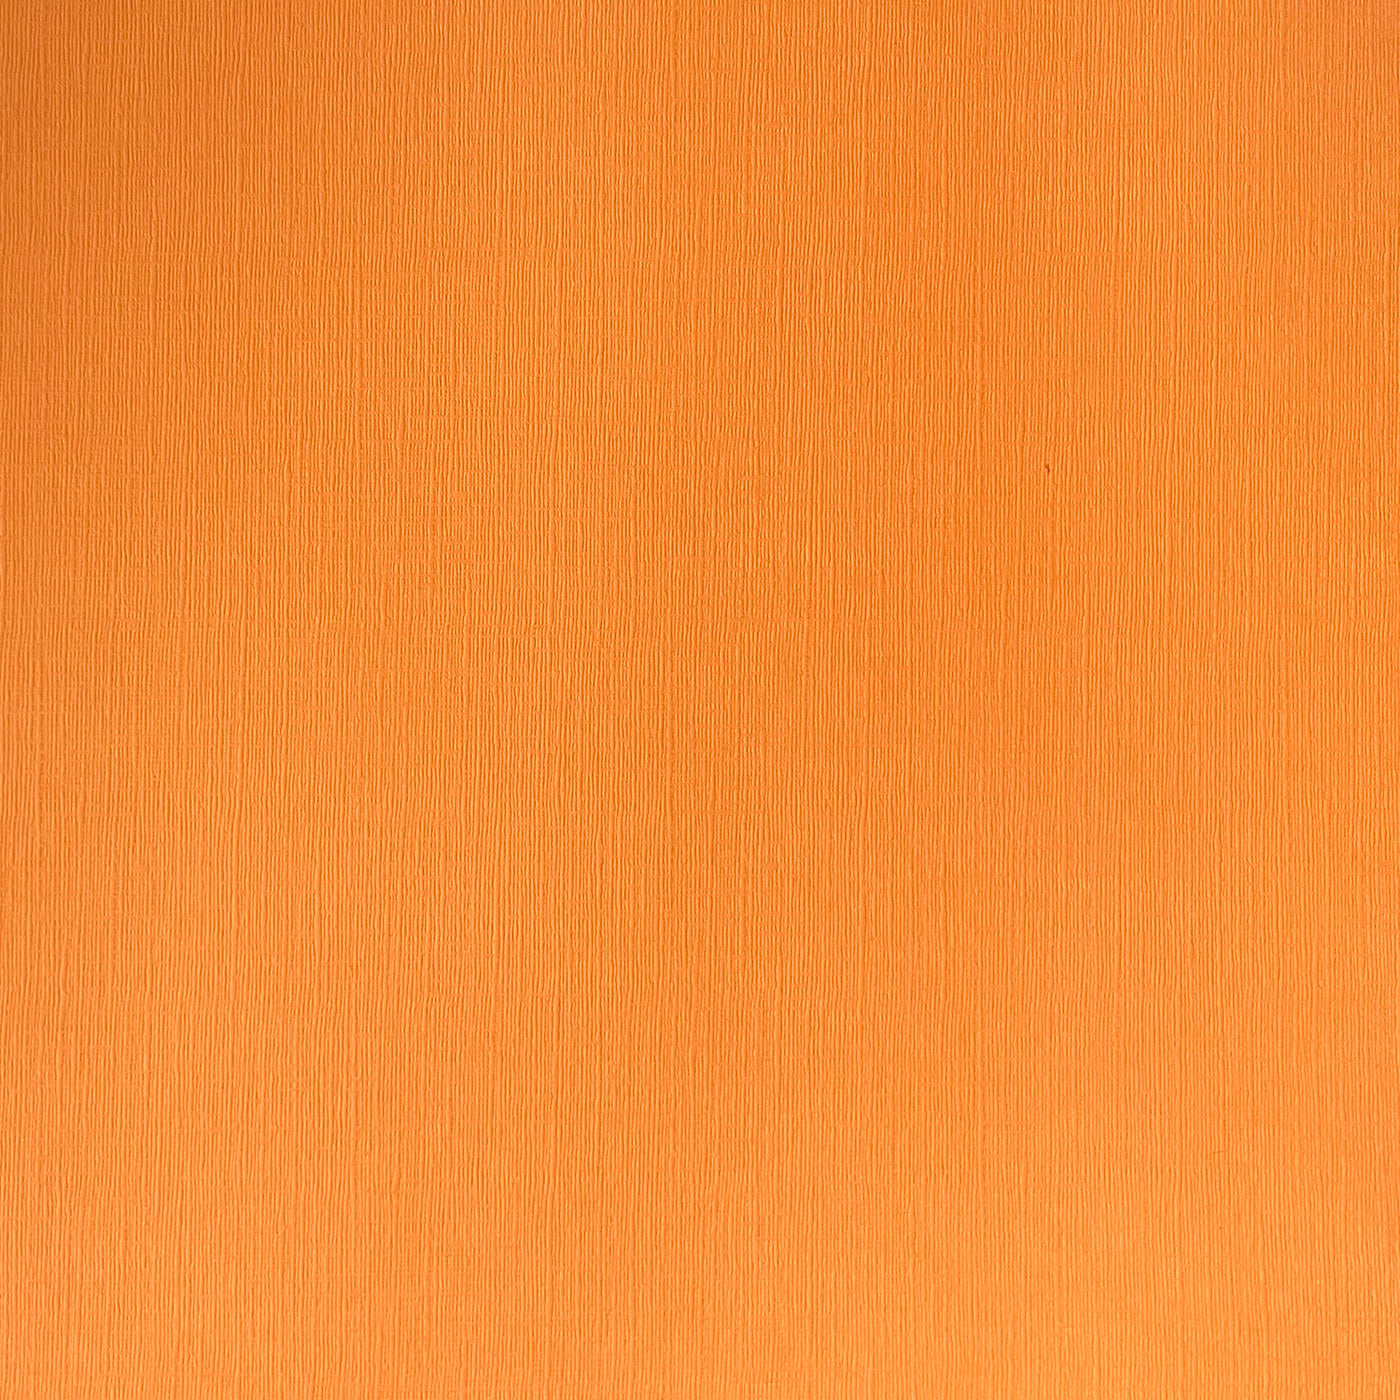 Sweet Potato - Textured 12x12 Cardstock - Orange canvas texture